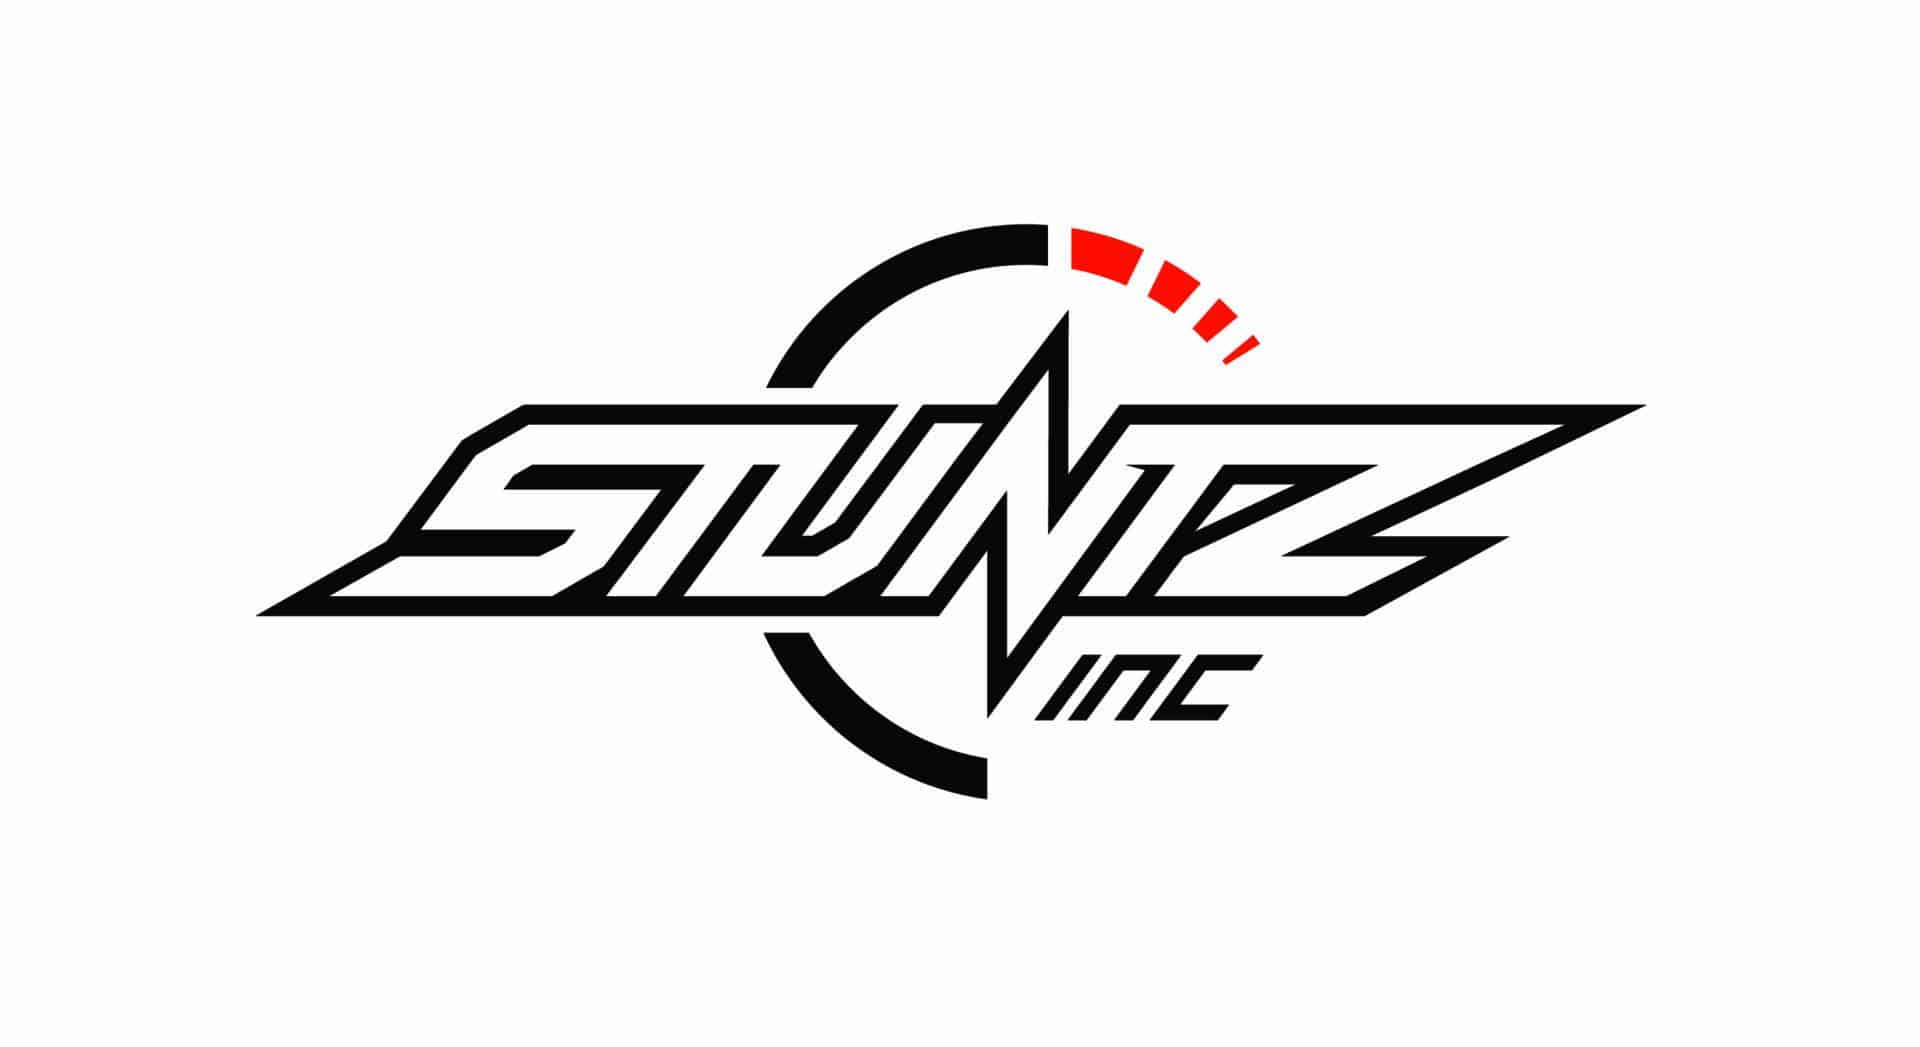 Stuntz Inc